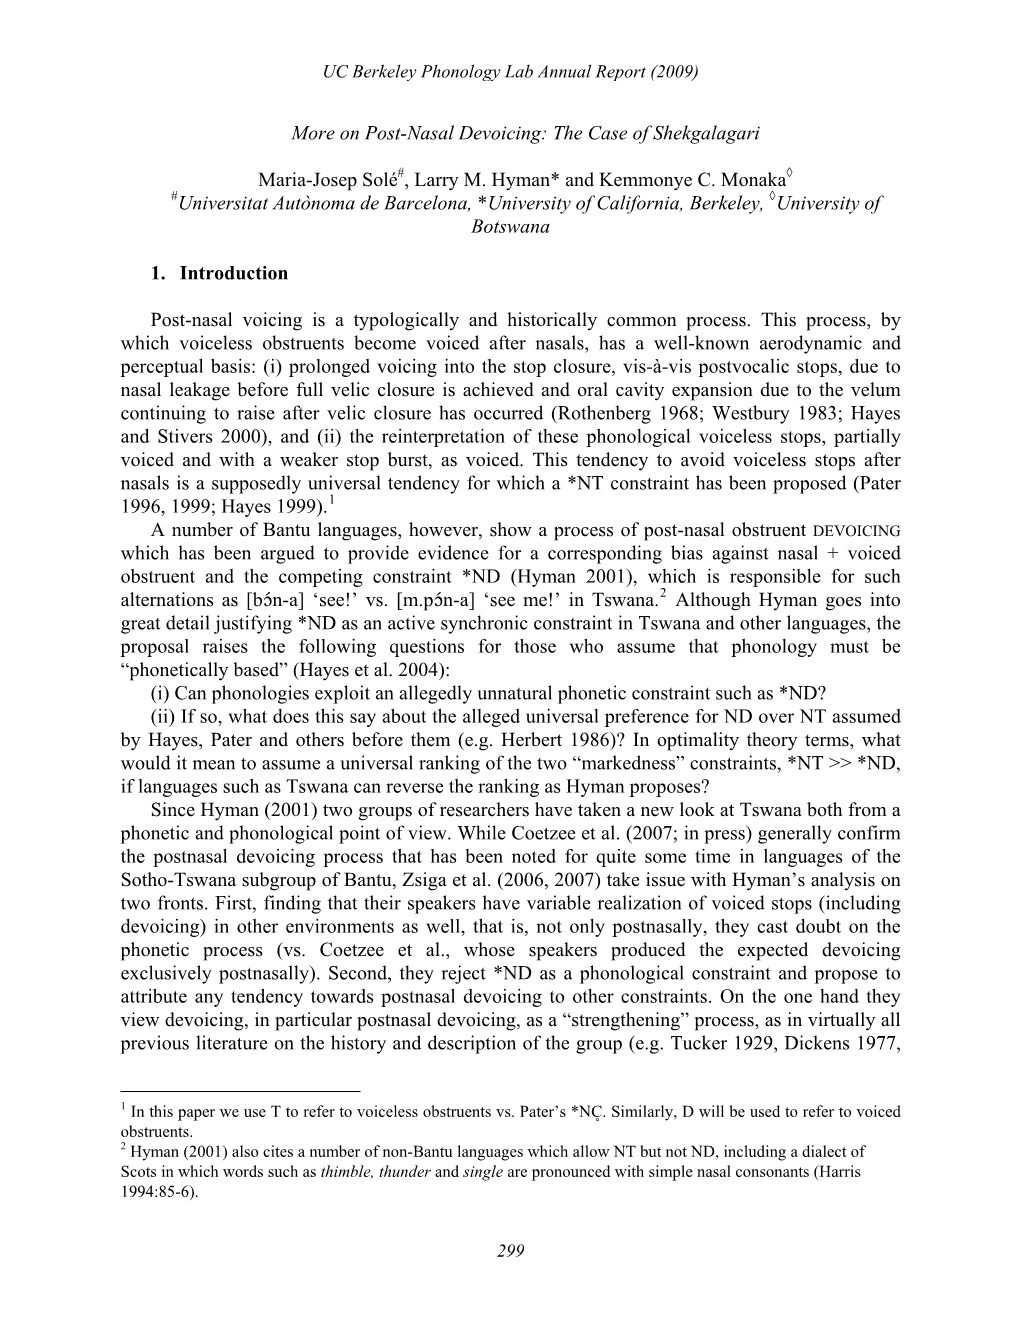 More on Post-Nasal Devoicing: the Case of Shekgalagari Maria-Josep Solé , Larry M. Hyman* and Kemmonye C. Monaka Universitat Au